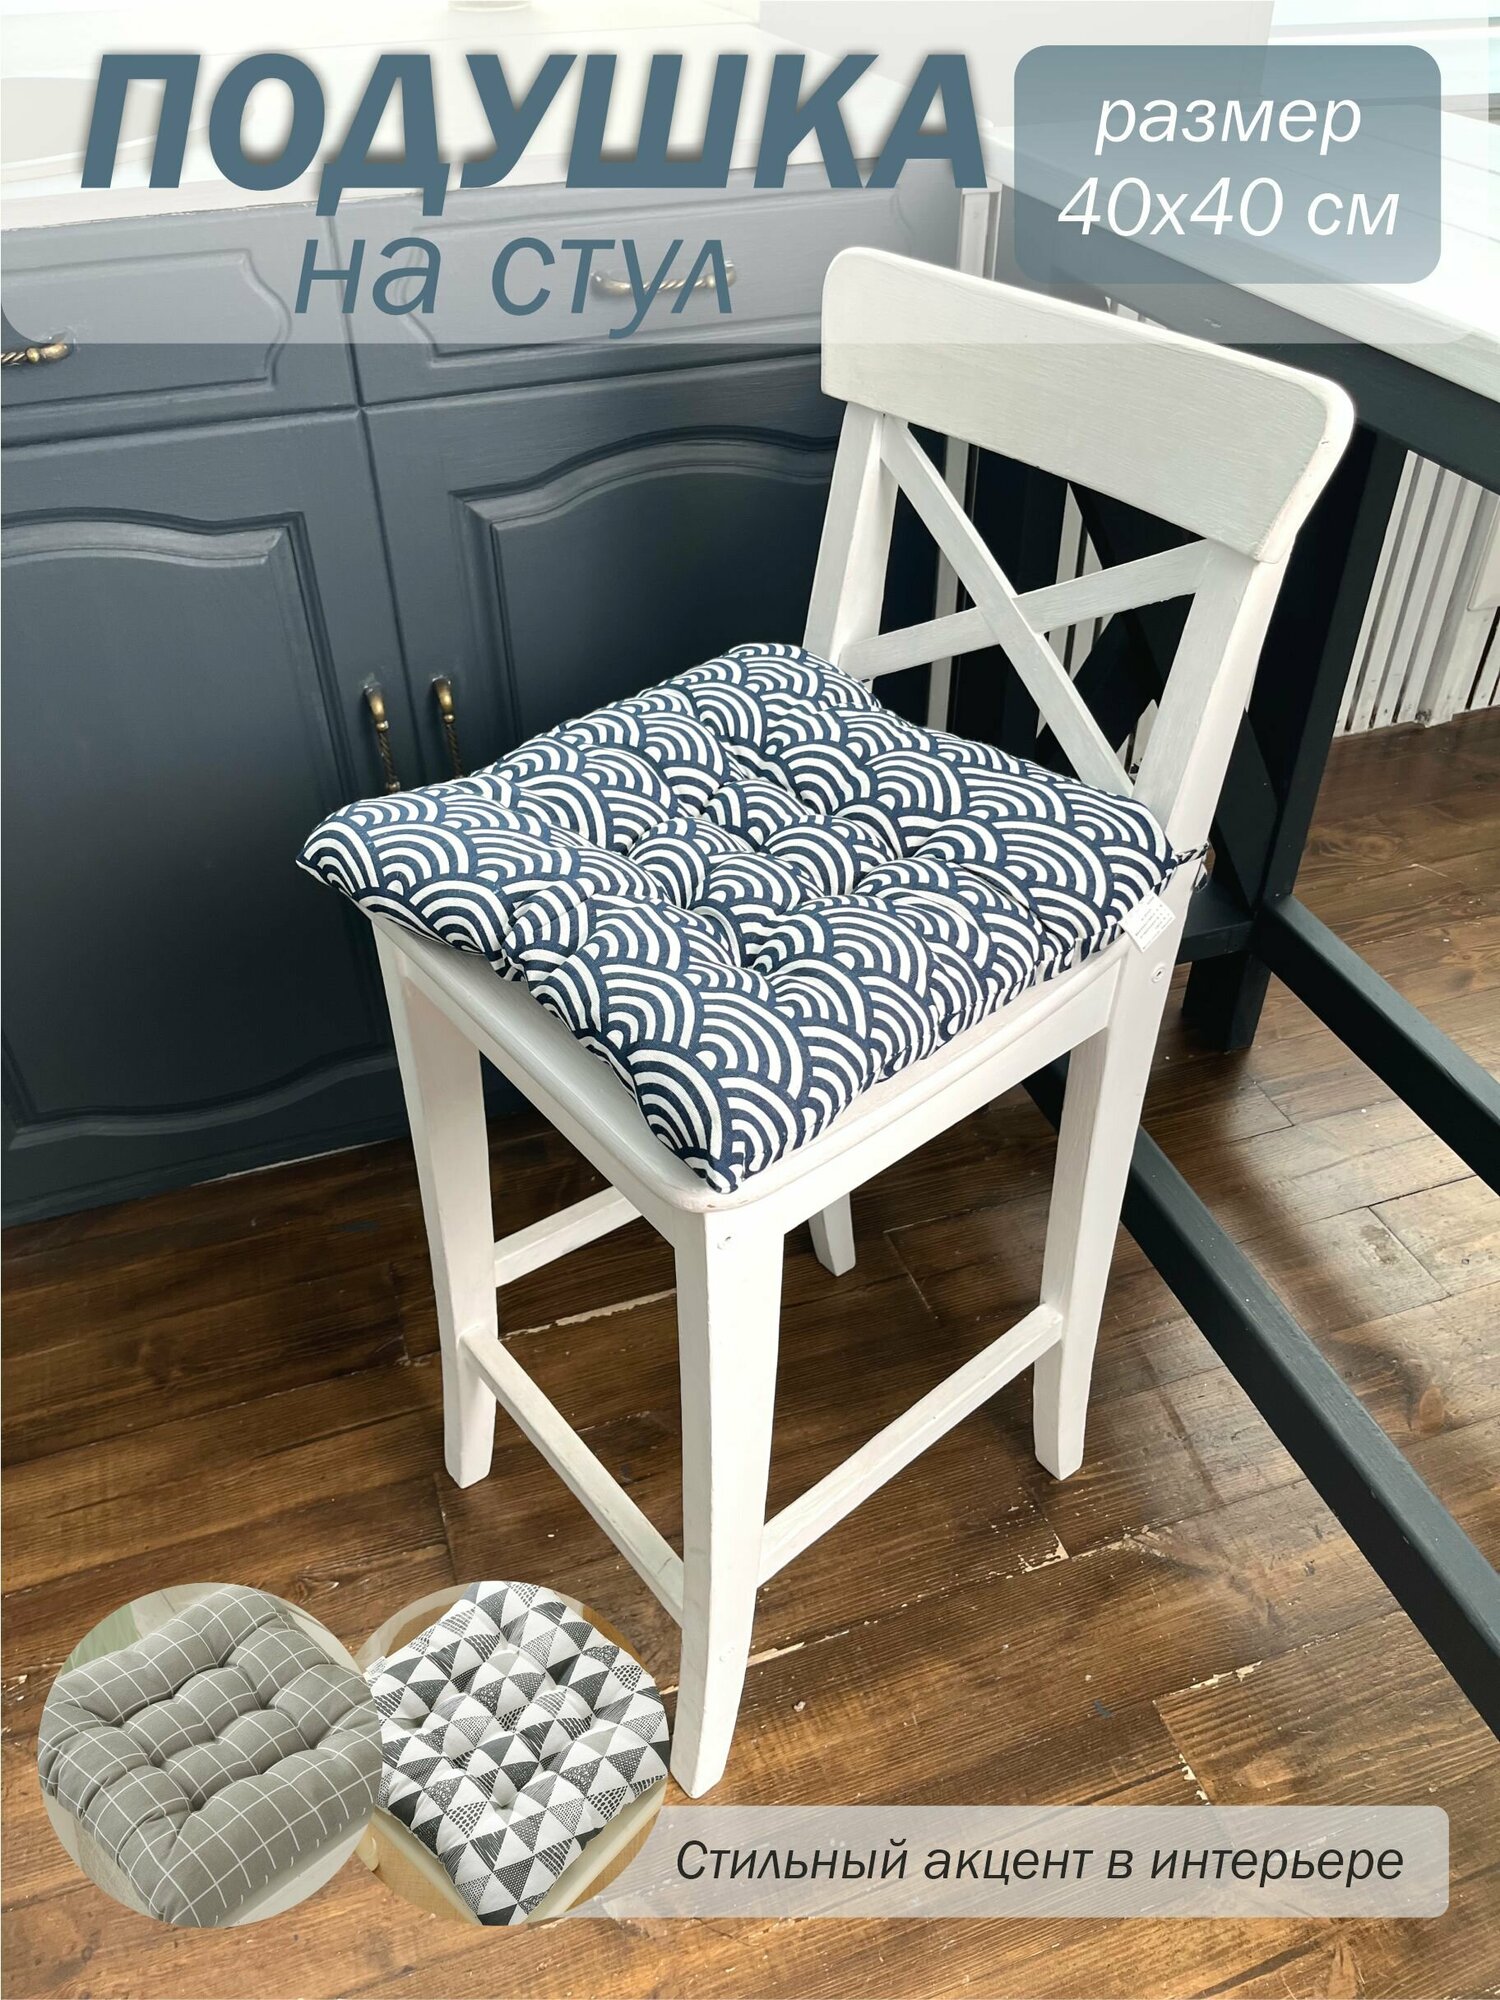 Подушка на стул квадратная / подушка для стула на завязках 40 на 40 см, хлопок